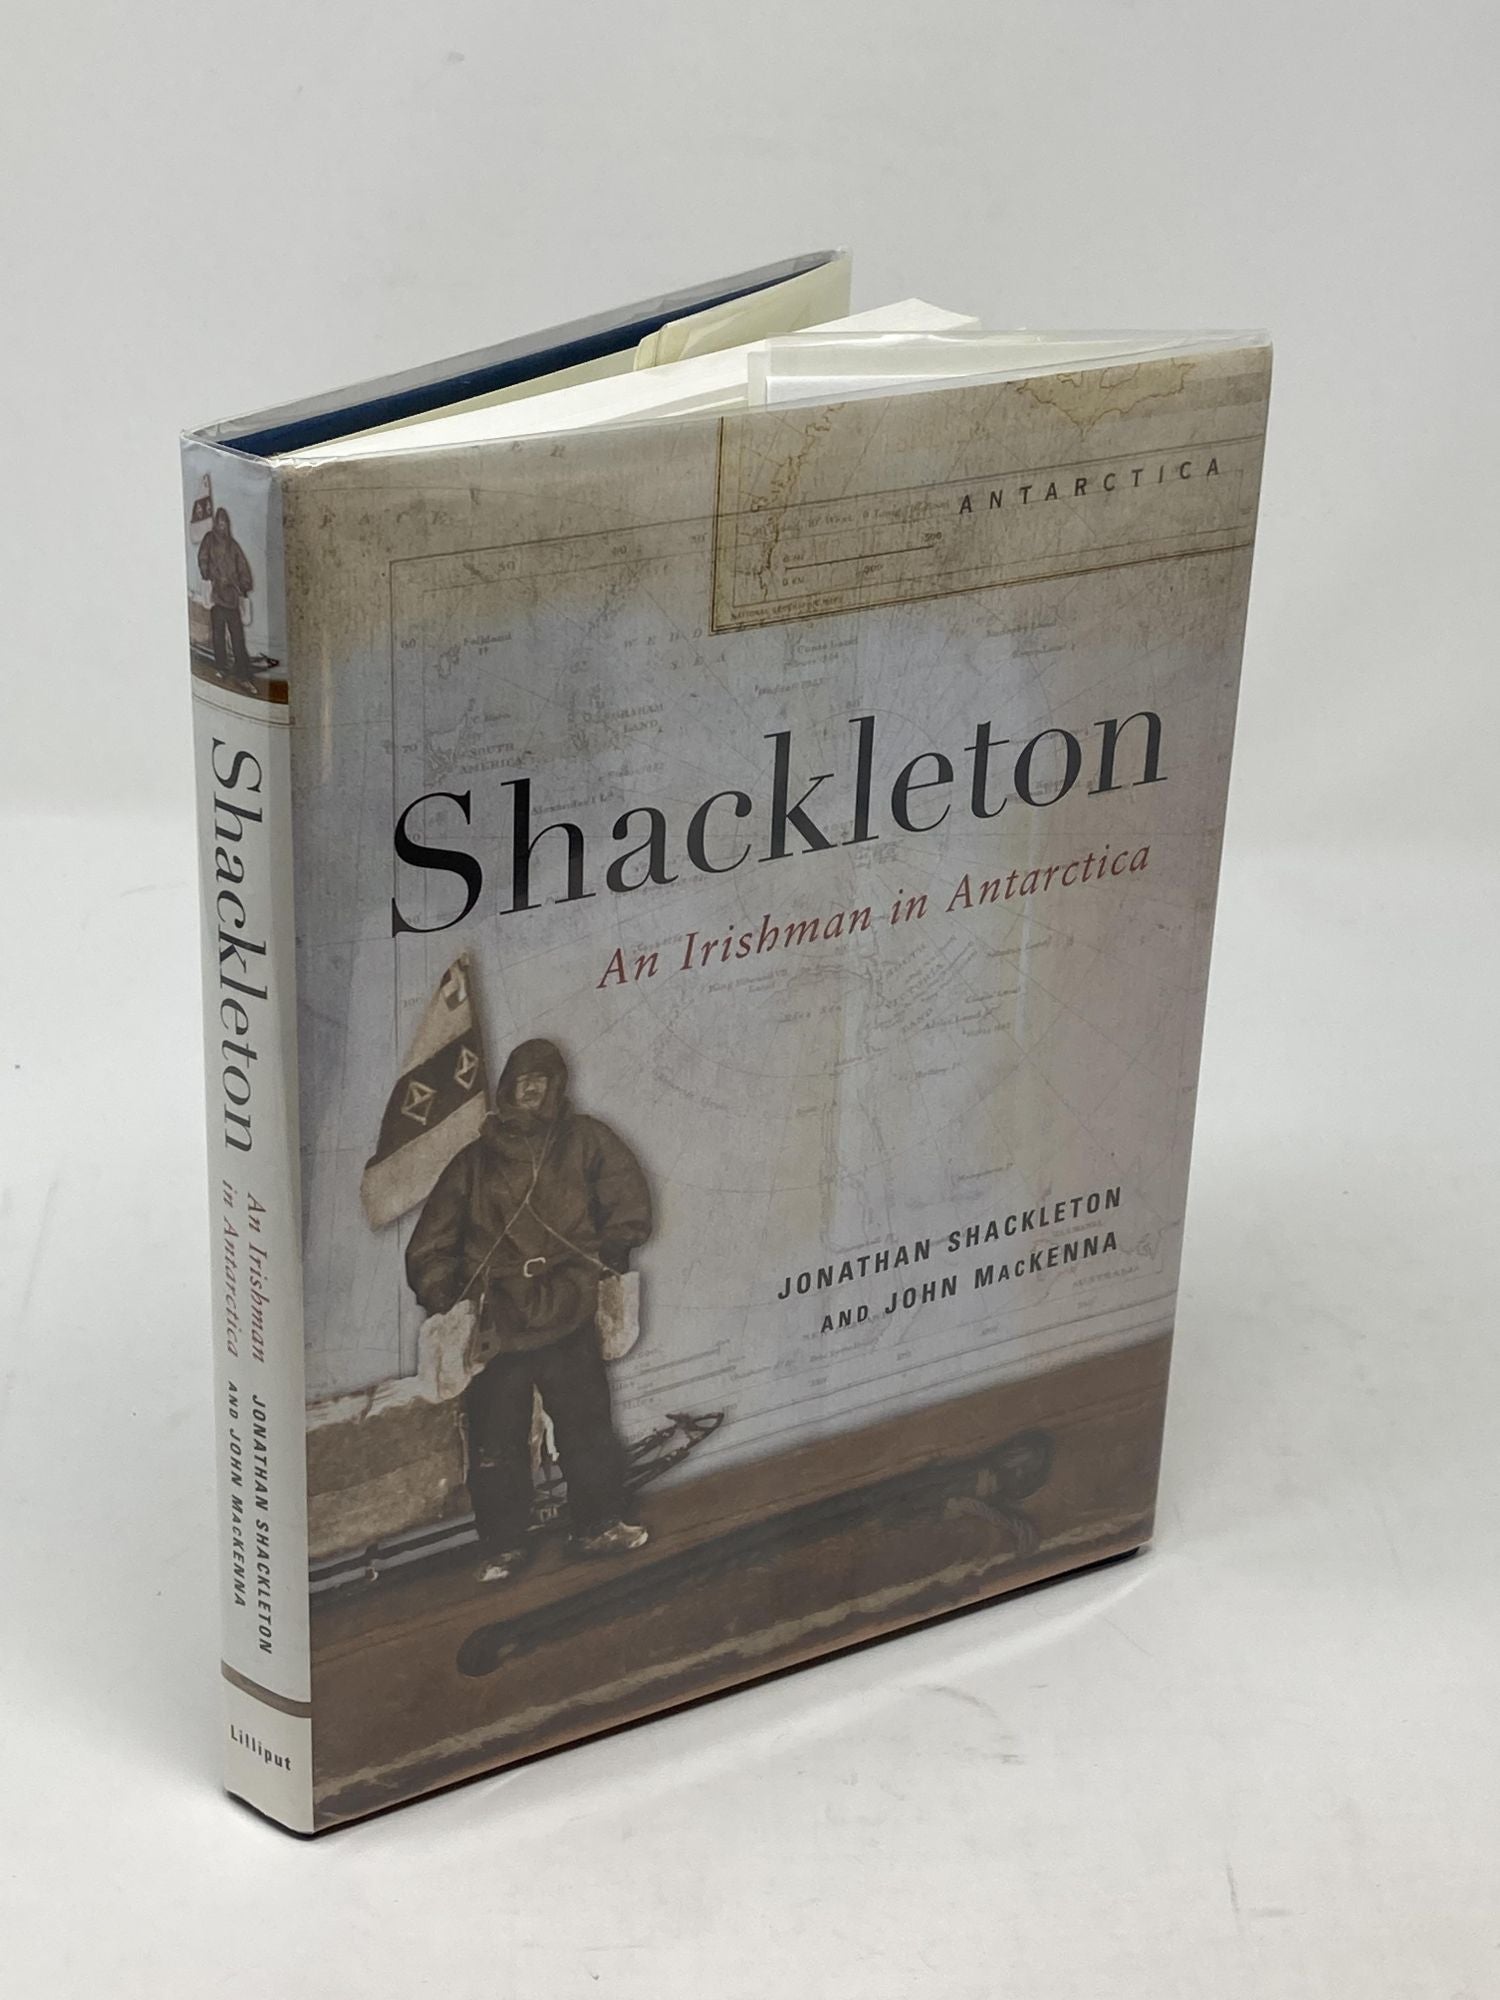 Shackleton, Jonathan and John MacKenna - Shackleton: An Irishman in Antarctica (Signed)